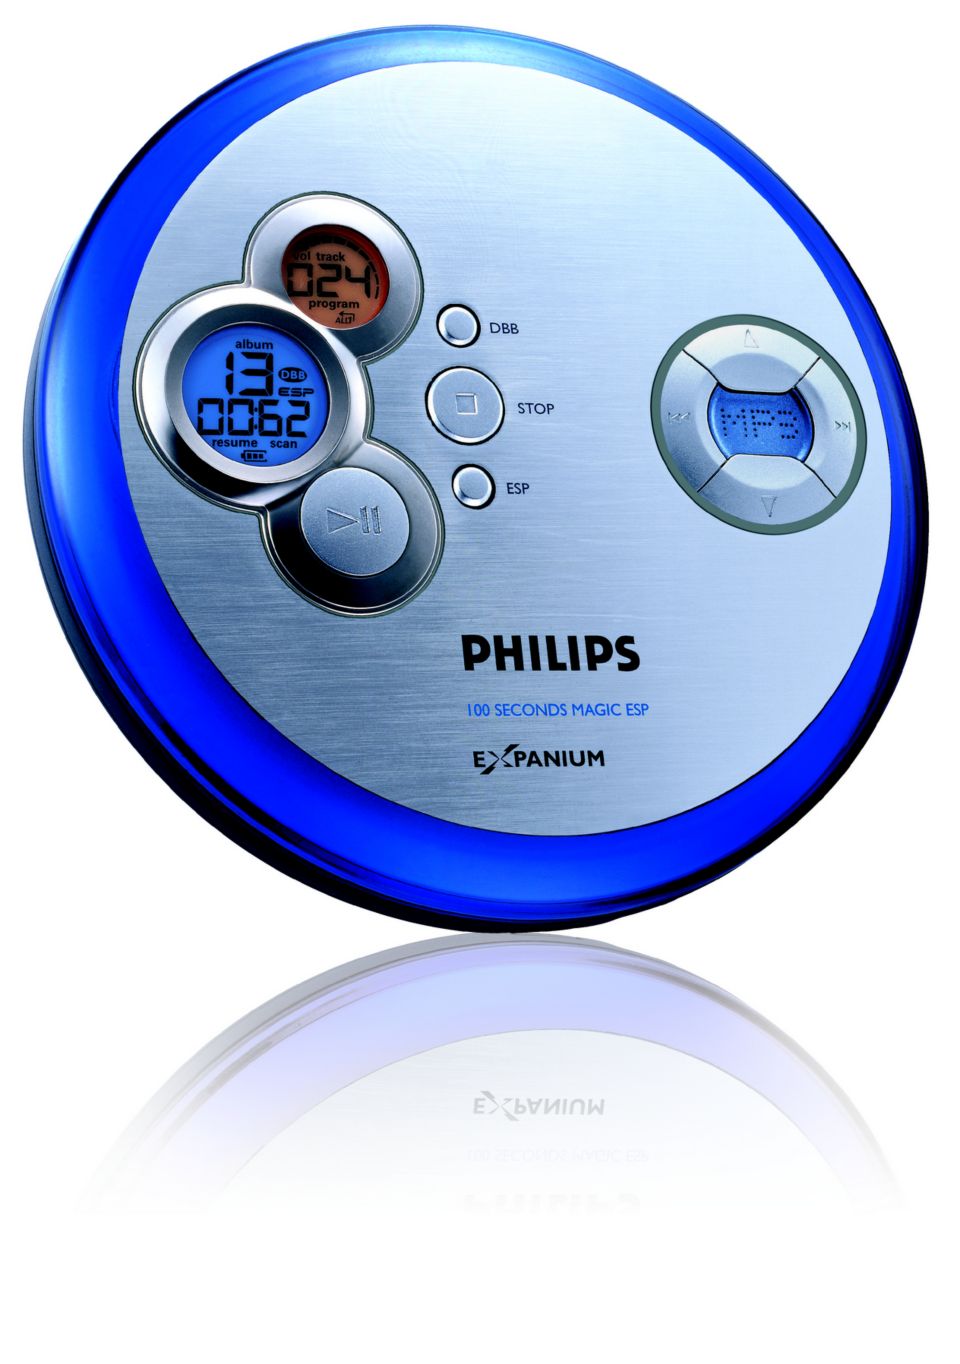 Philips Expanium CD Player CD-MP3 Disc Discman EXP320/17 Skip